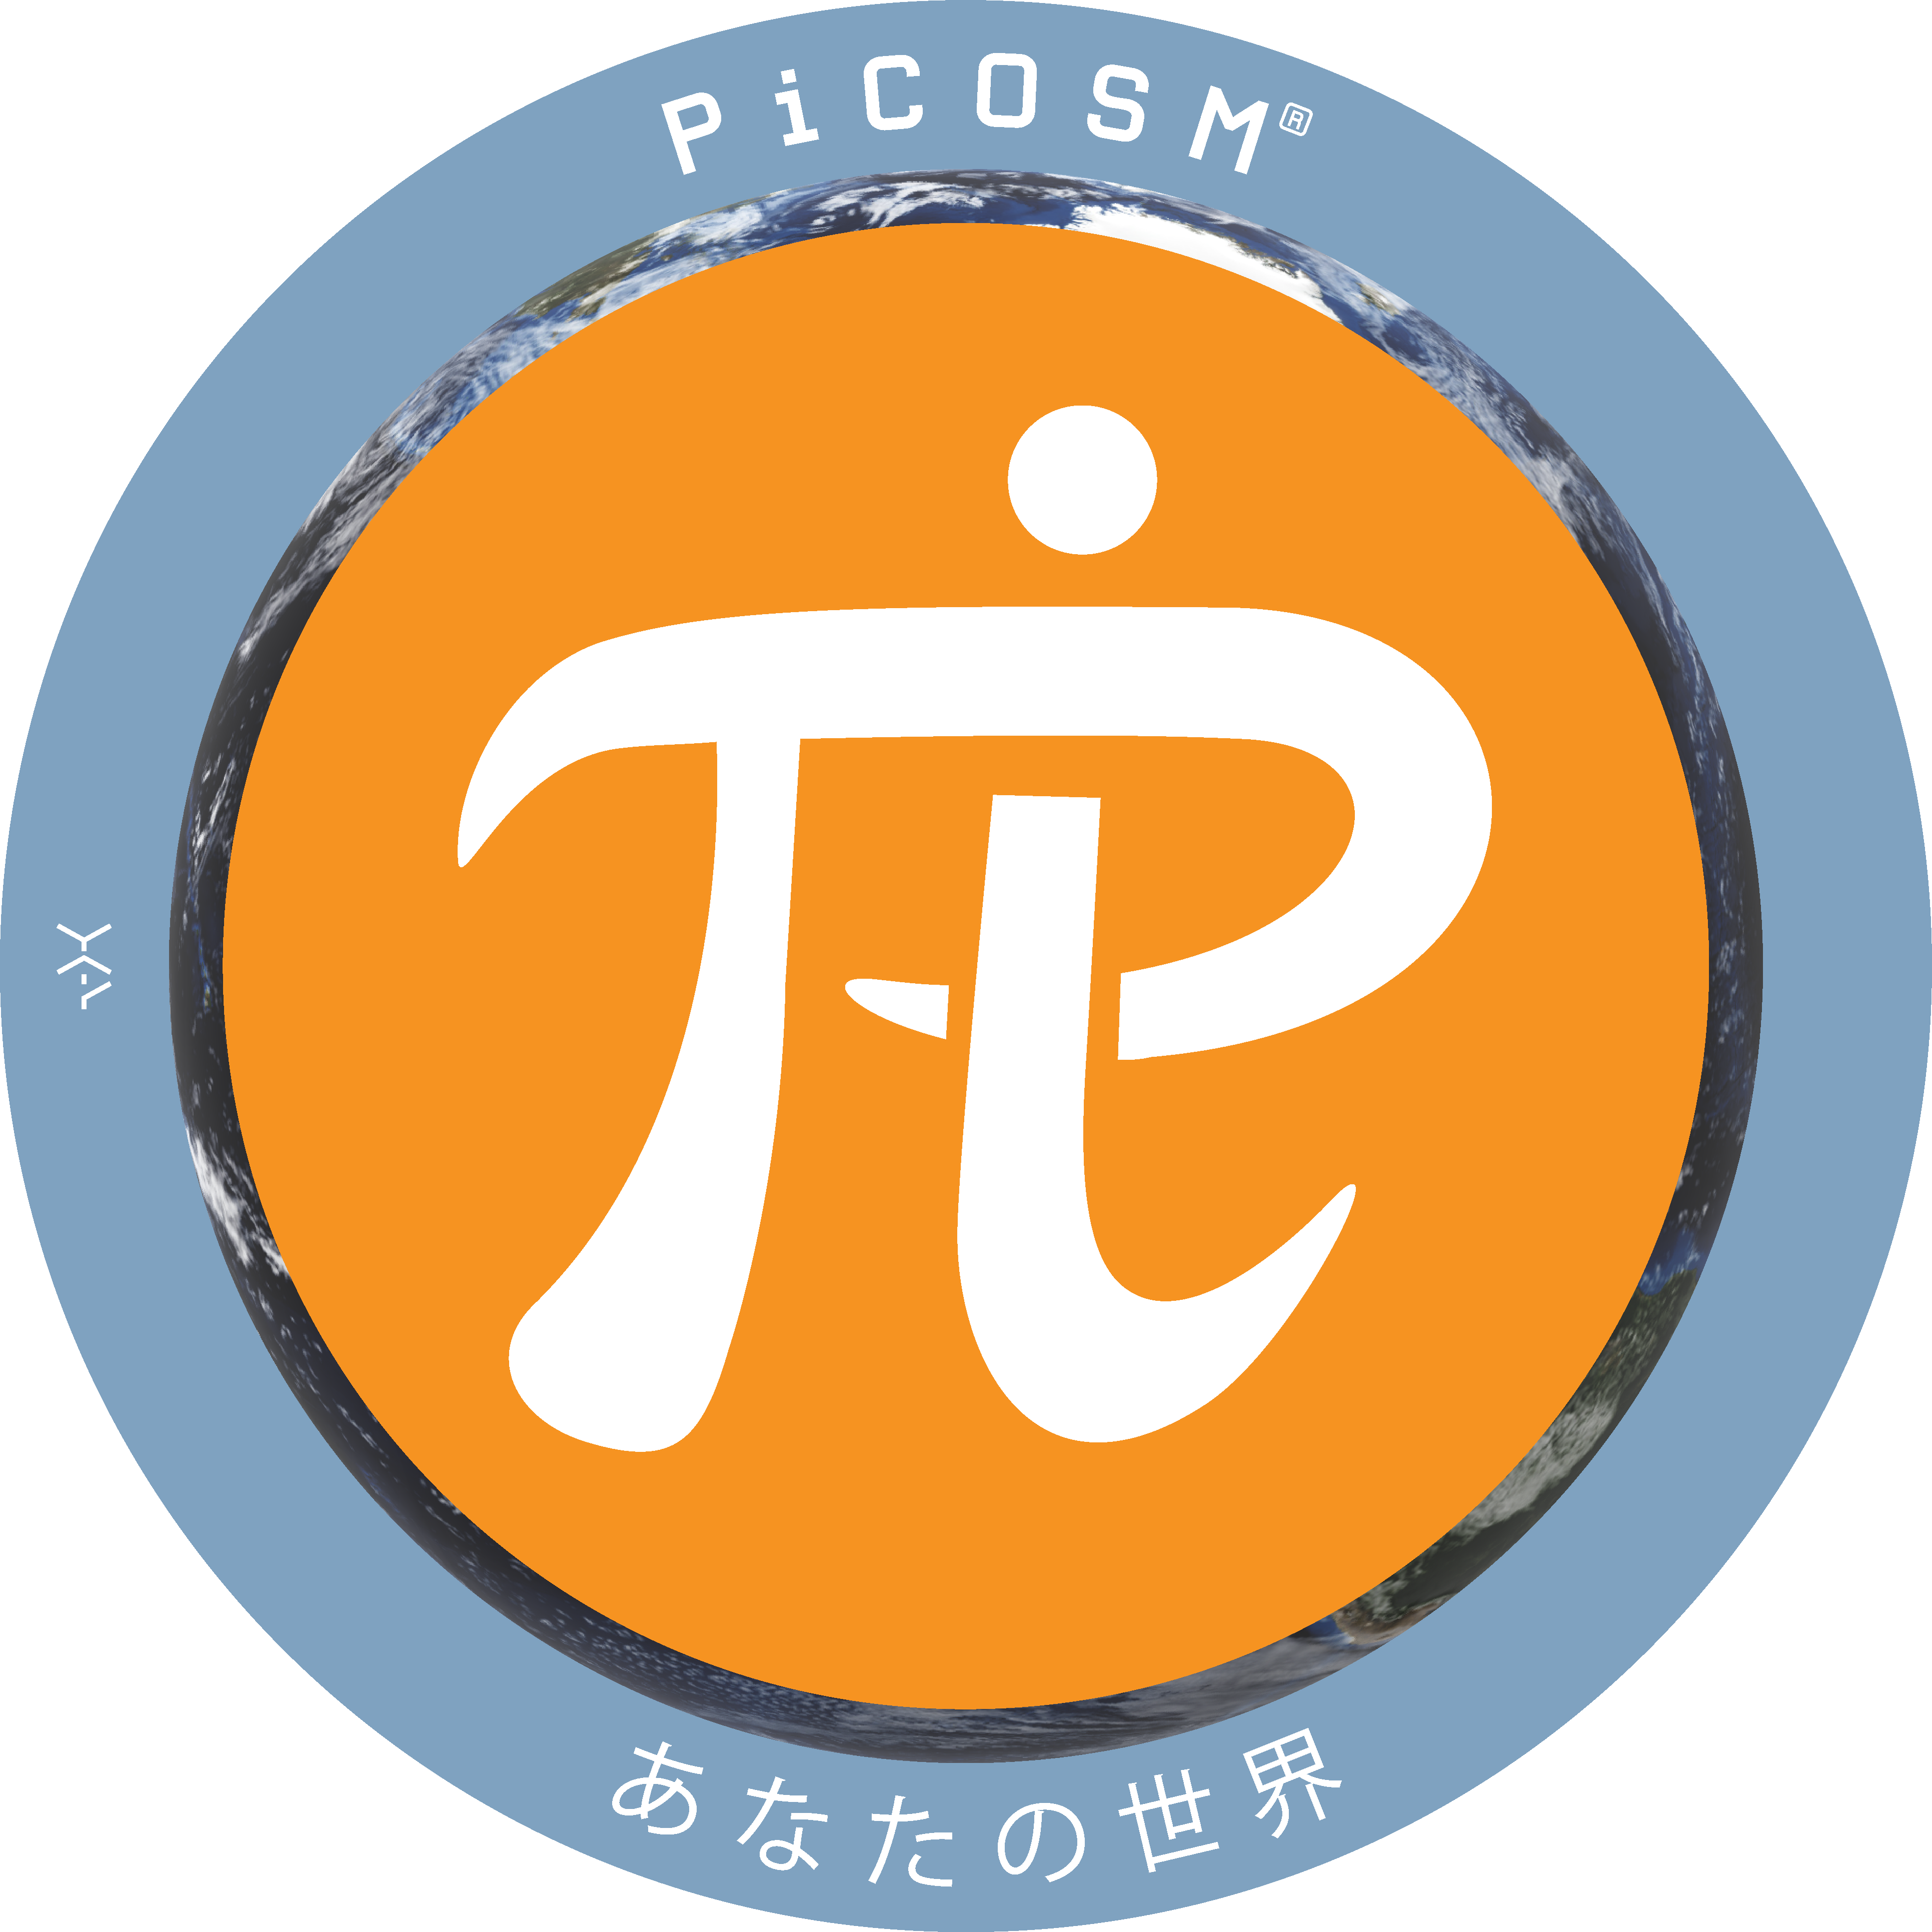 PiCosm logo